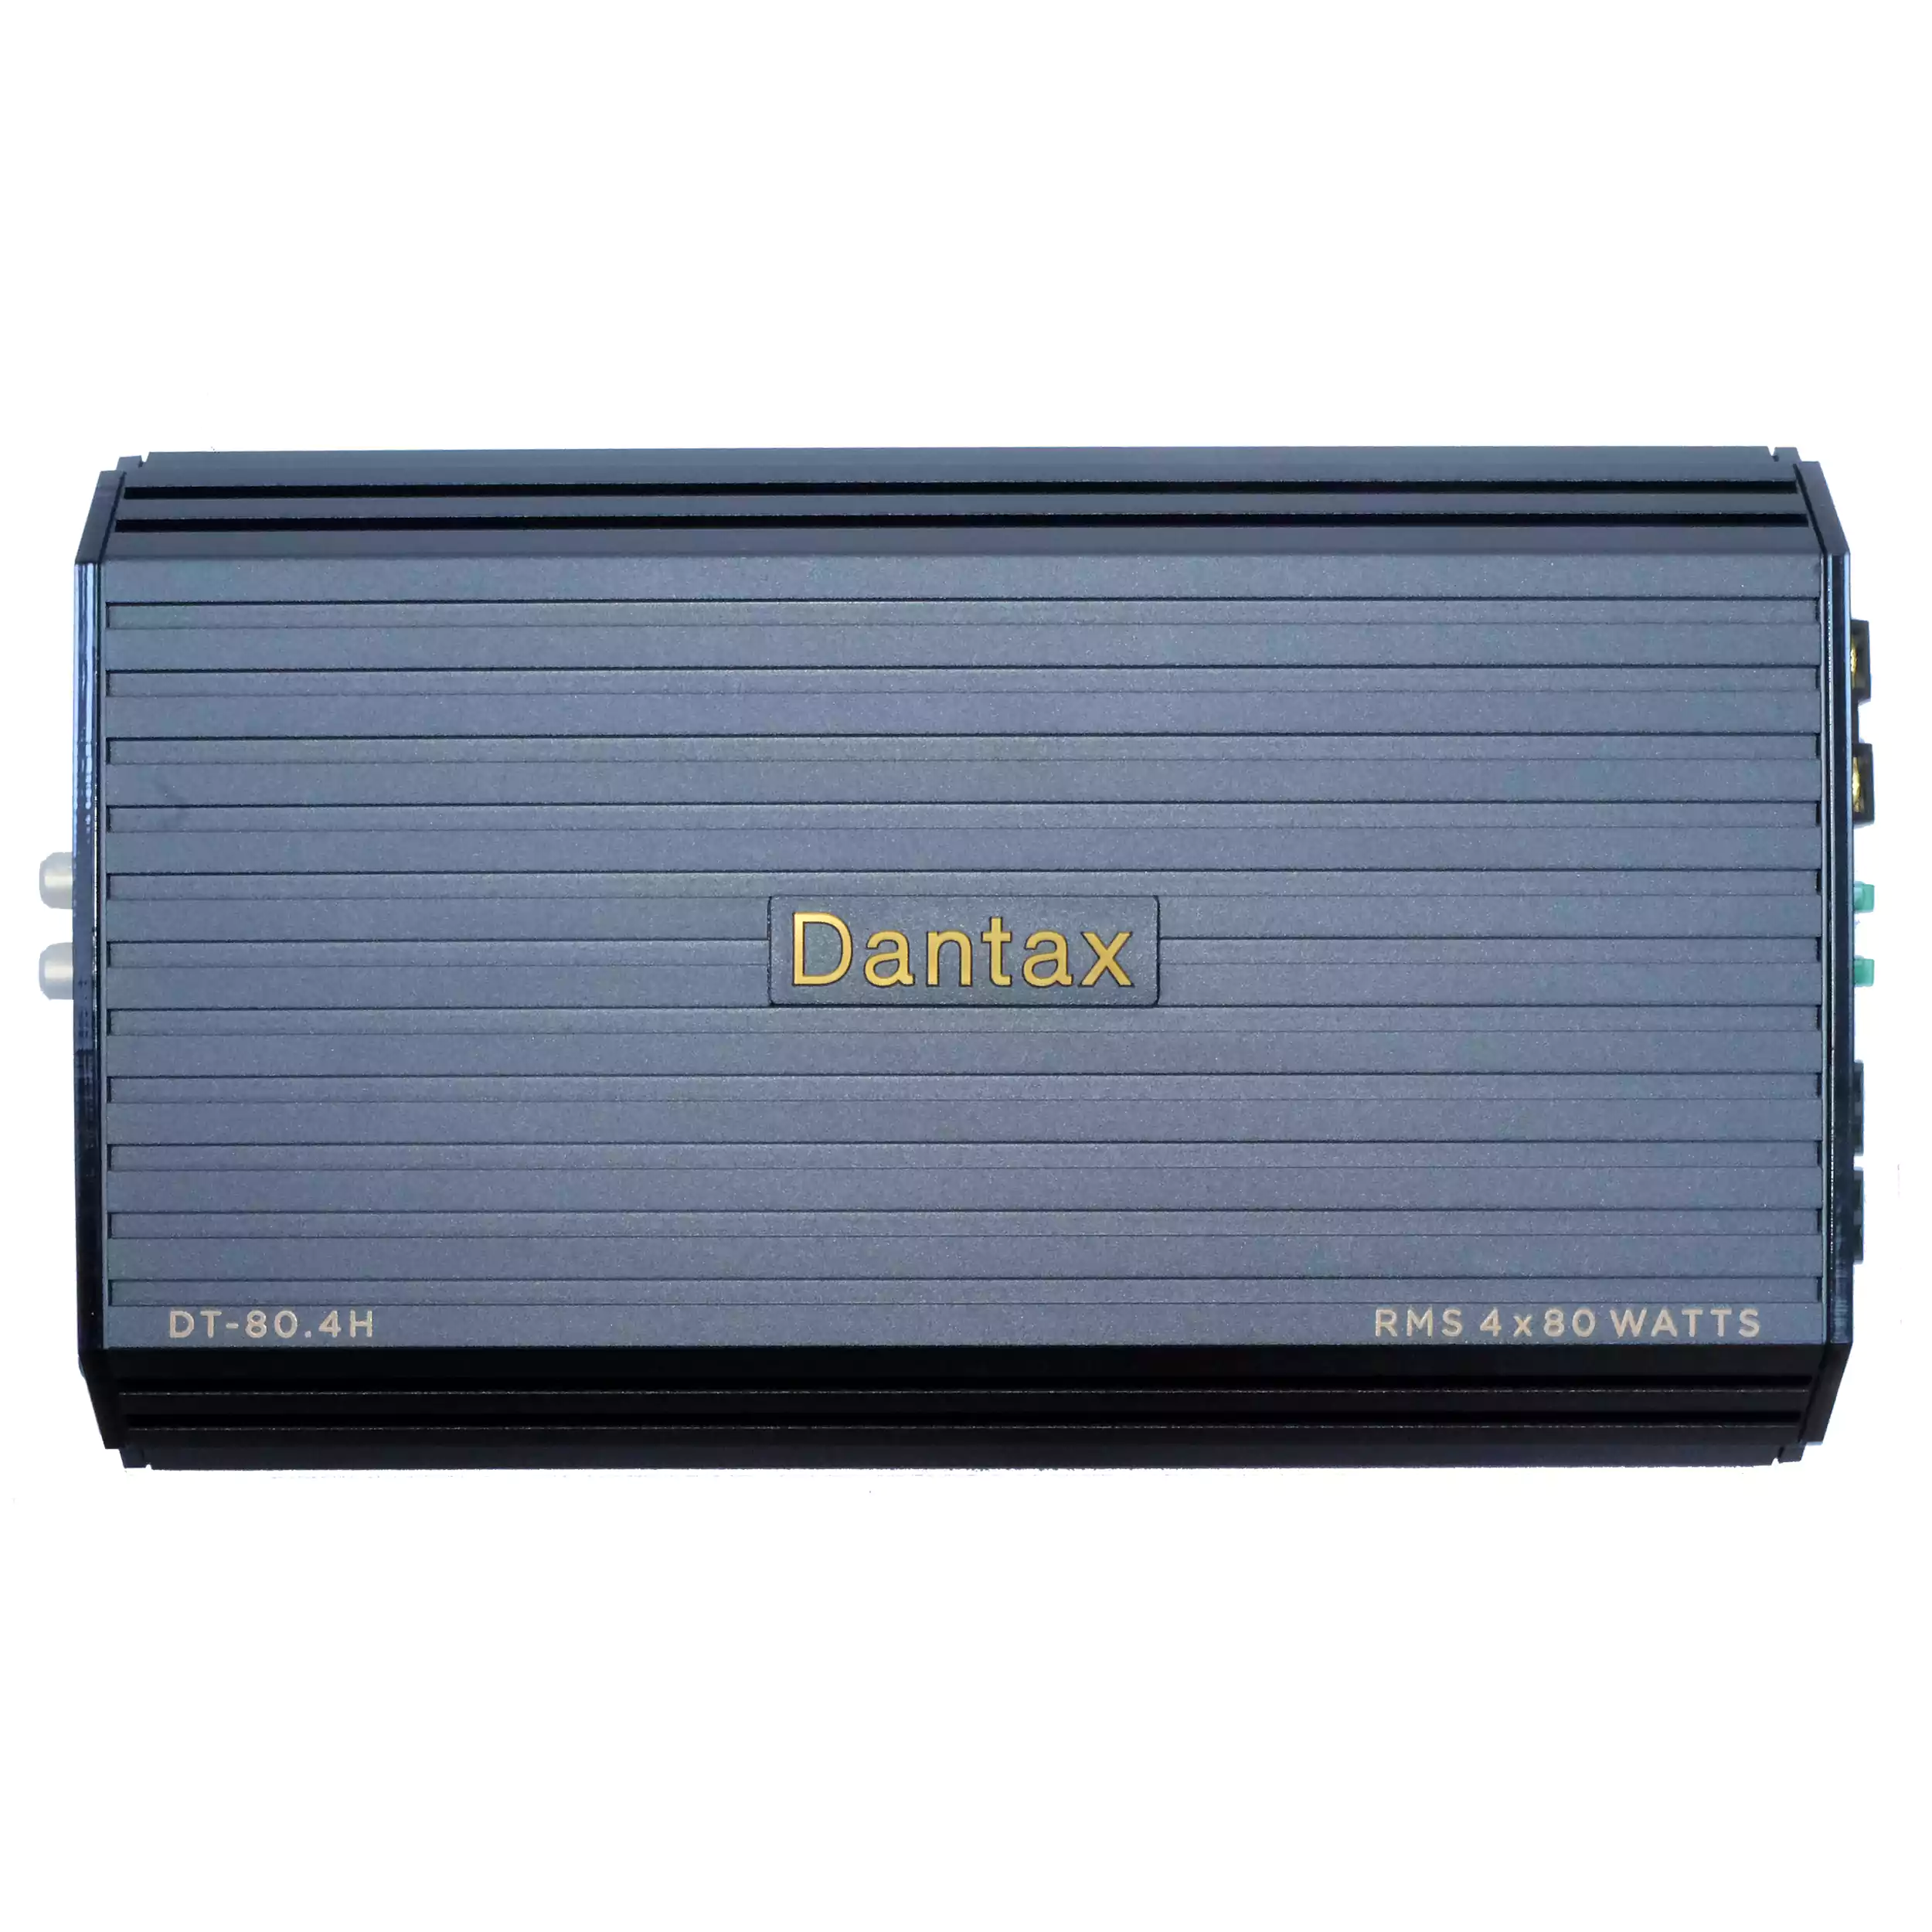 dantax dt 80.4H 1 - آمپلی فایر دنتکس مدل DT-80.4H